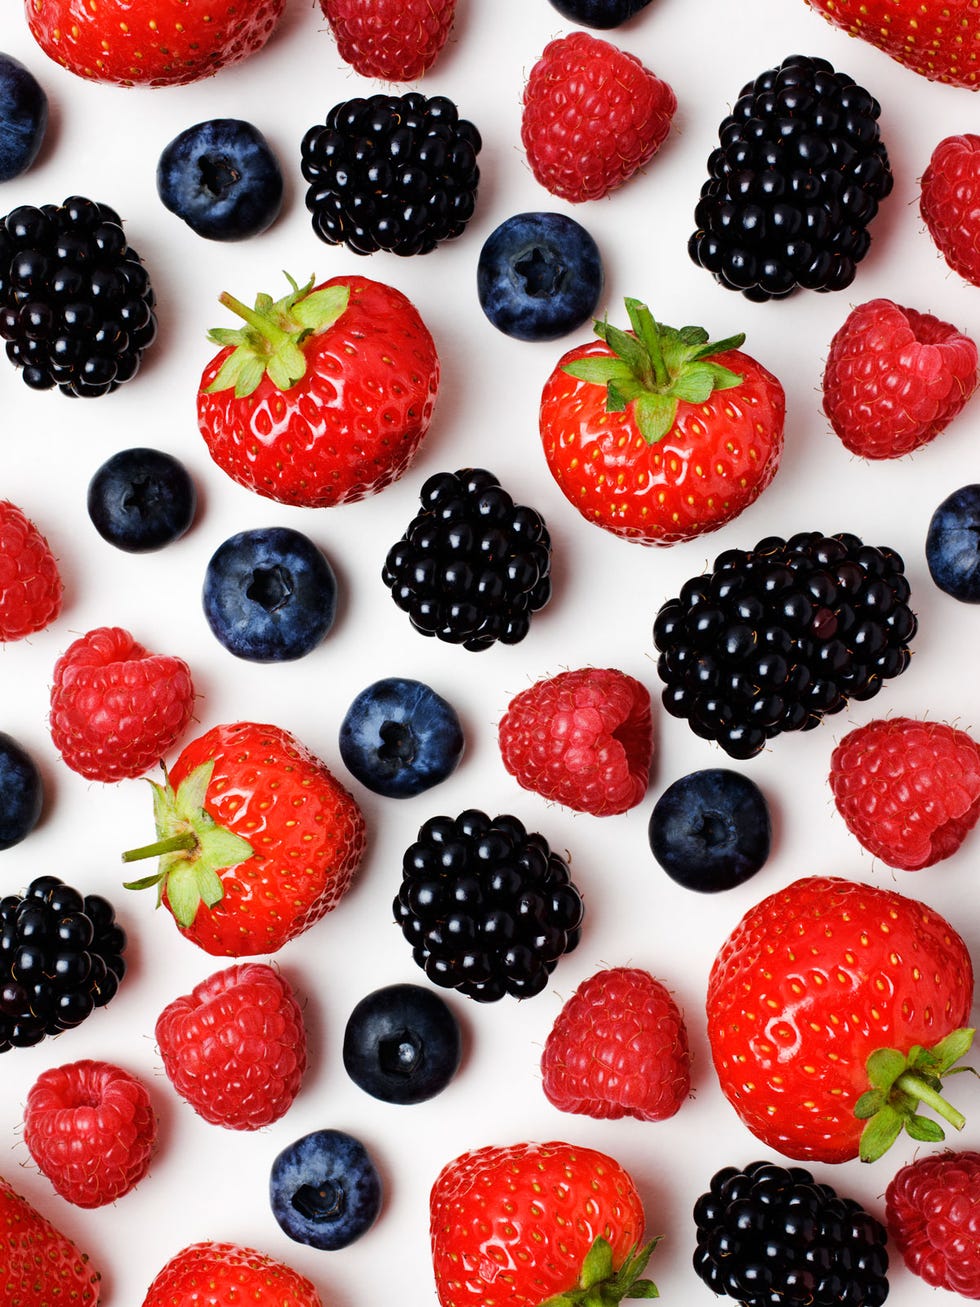 Food, Fruit, Produce, Natural foods, Sweetness, Boysenberry, Pattern, Berry, Frutti di bosco, Blackberry, 